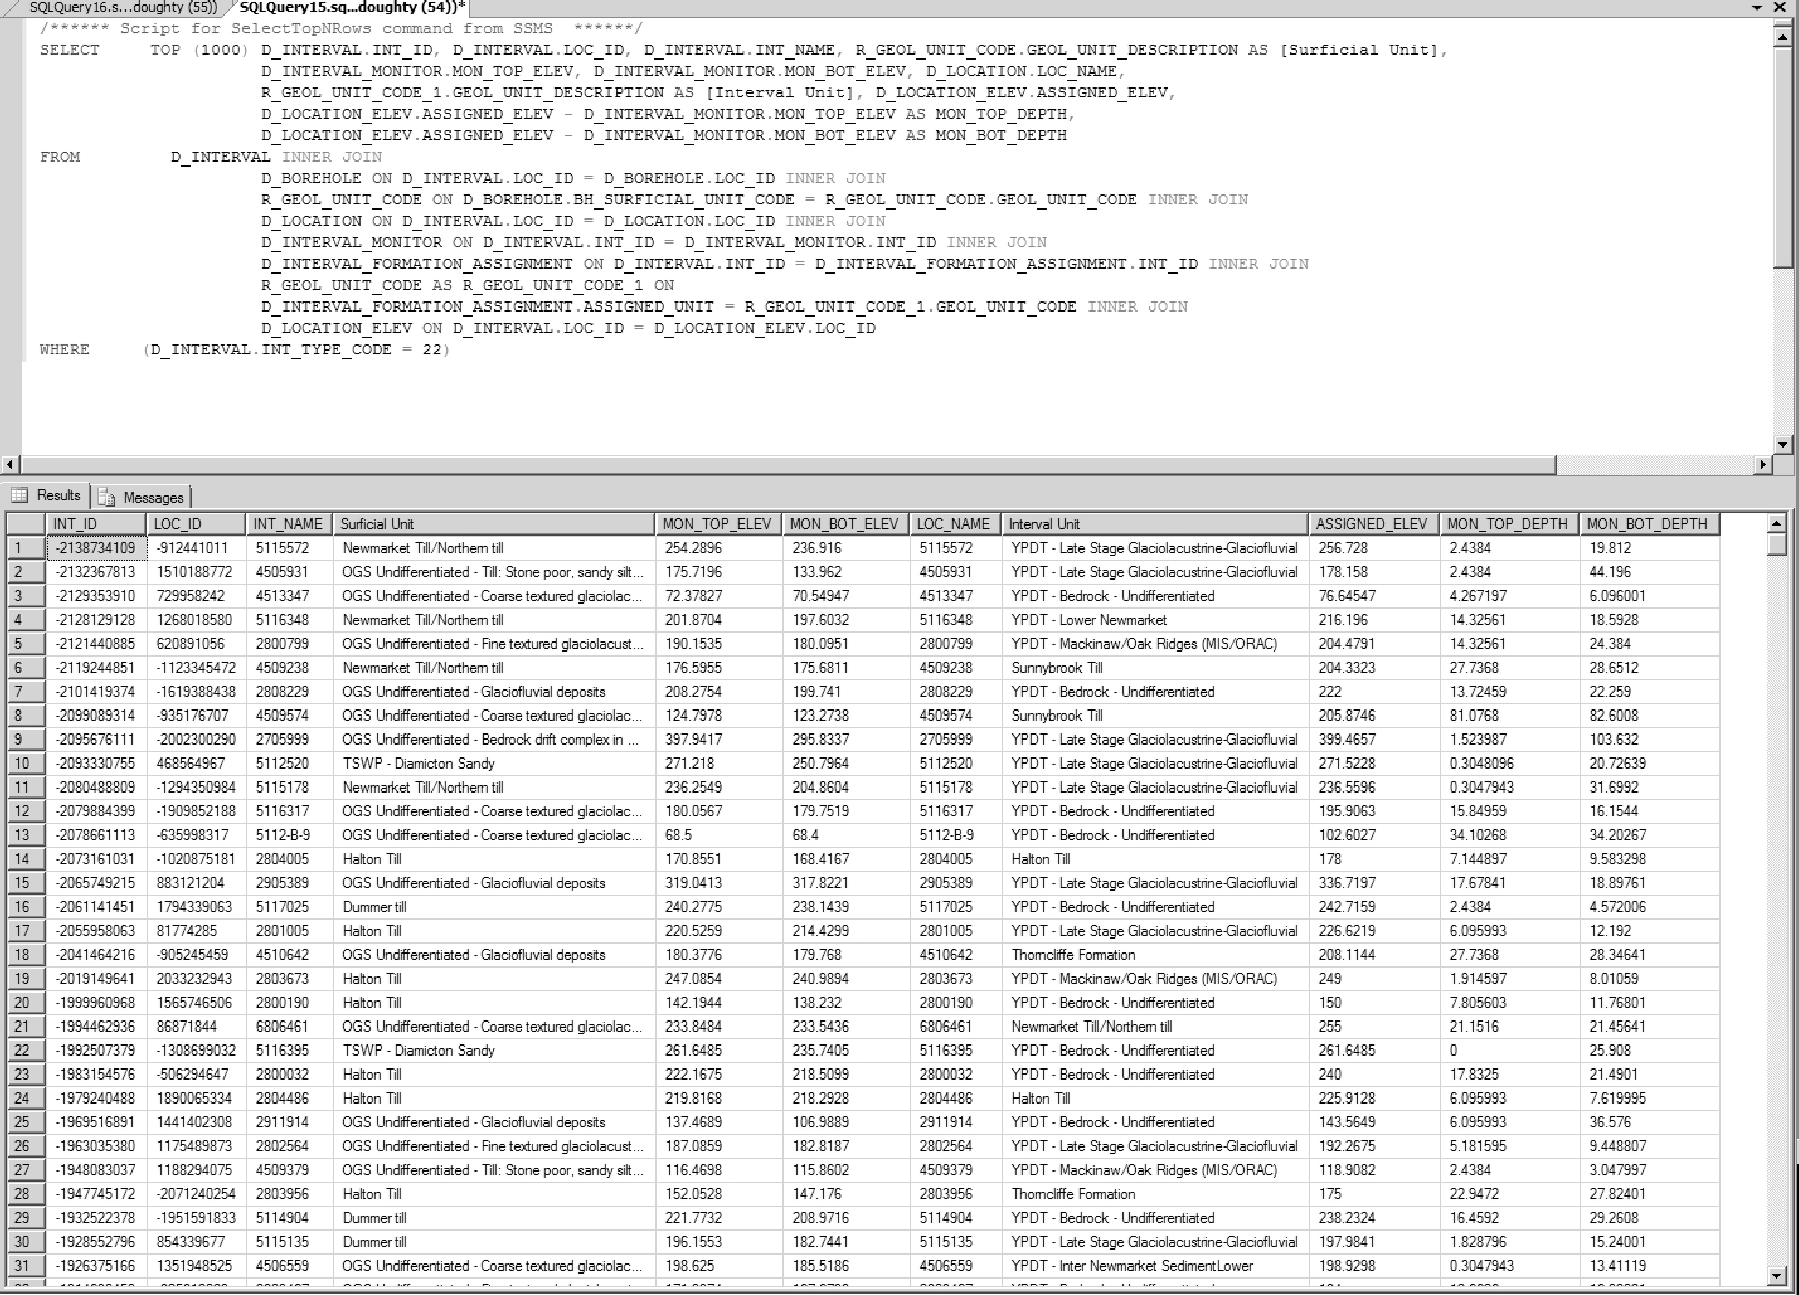 Figure J.2.6 Microsoft SQL - Results